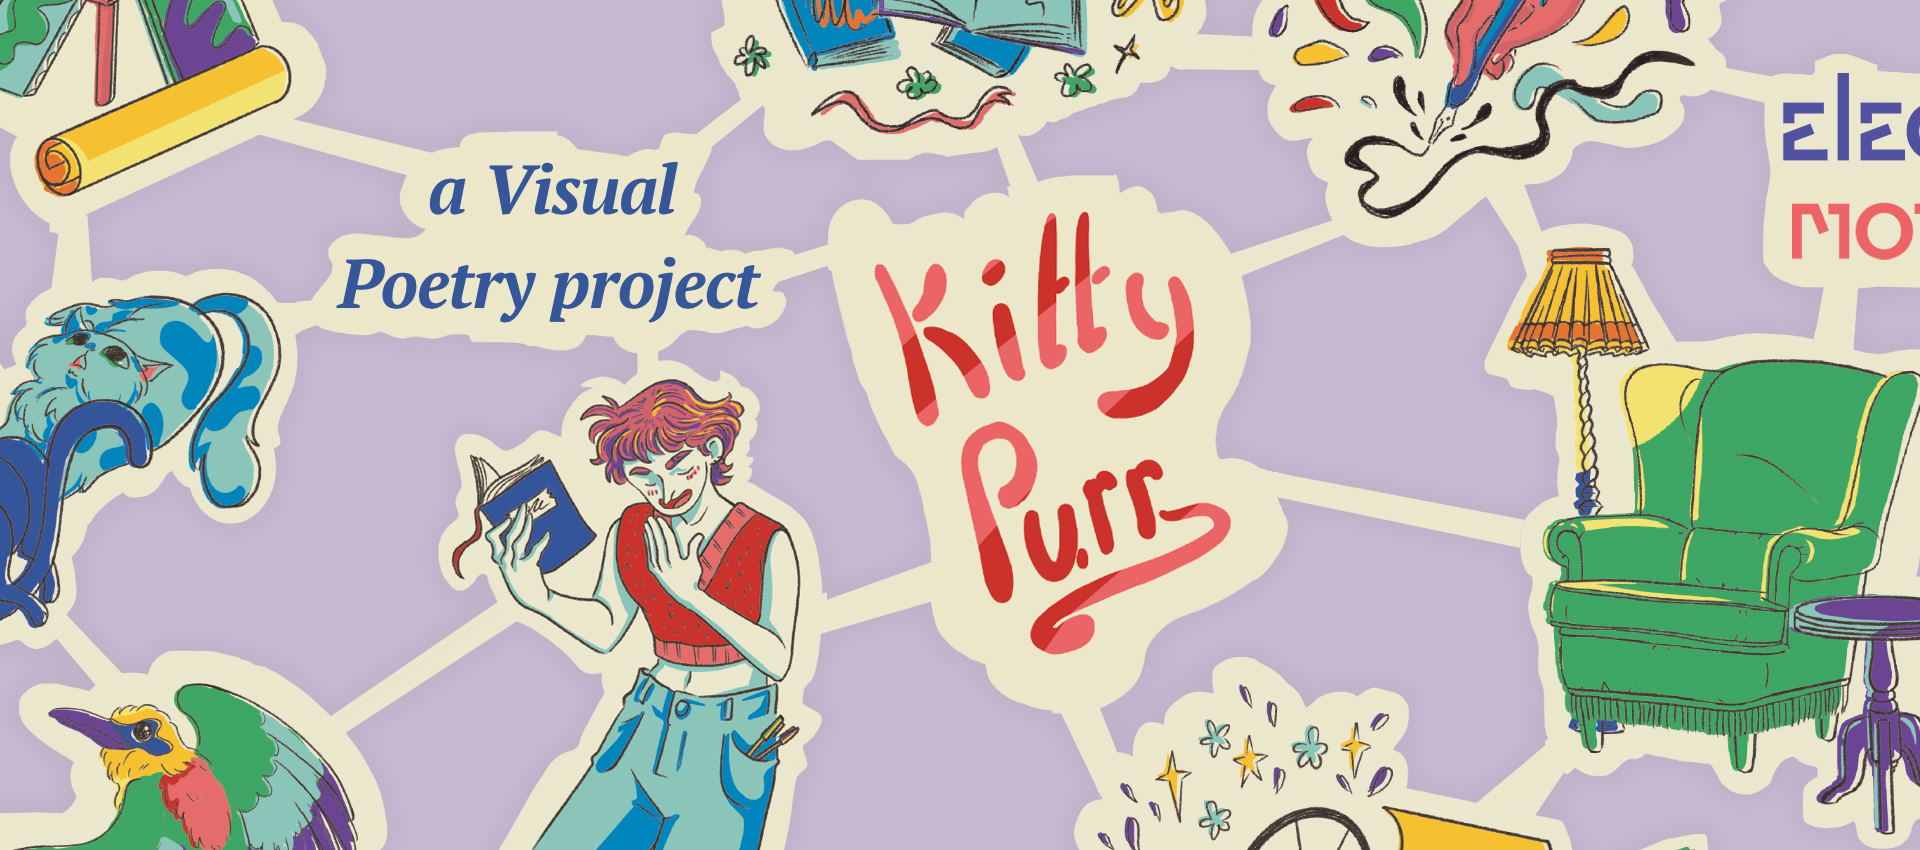 Kitty Purr kickoff - bookbinding workshop header